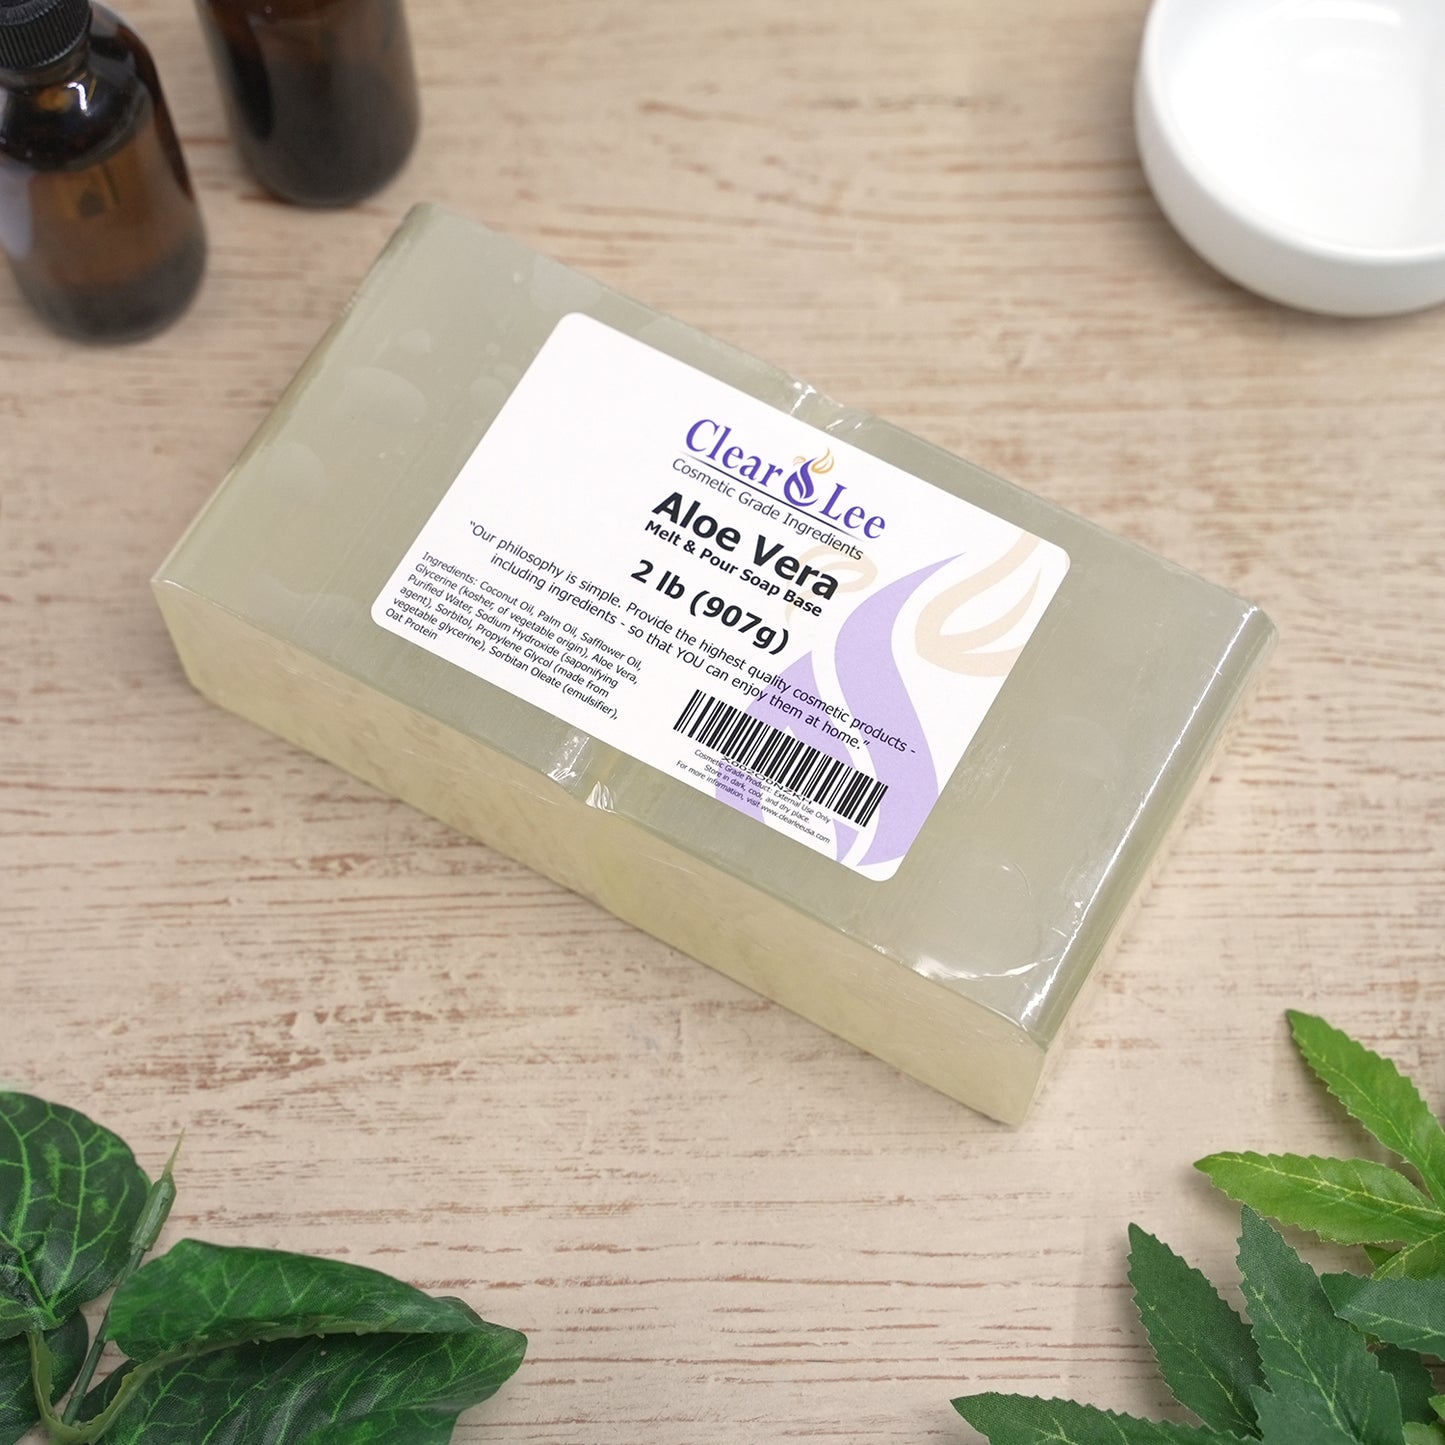 25 Lb Aloe Vera Clear Glycerin Melt & Soap Base Organic Natural 